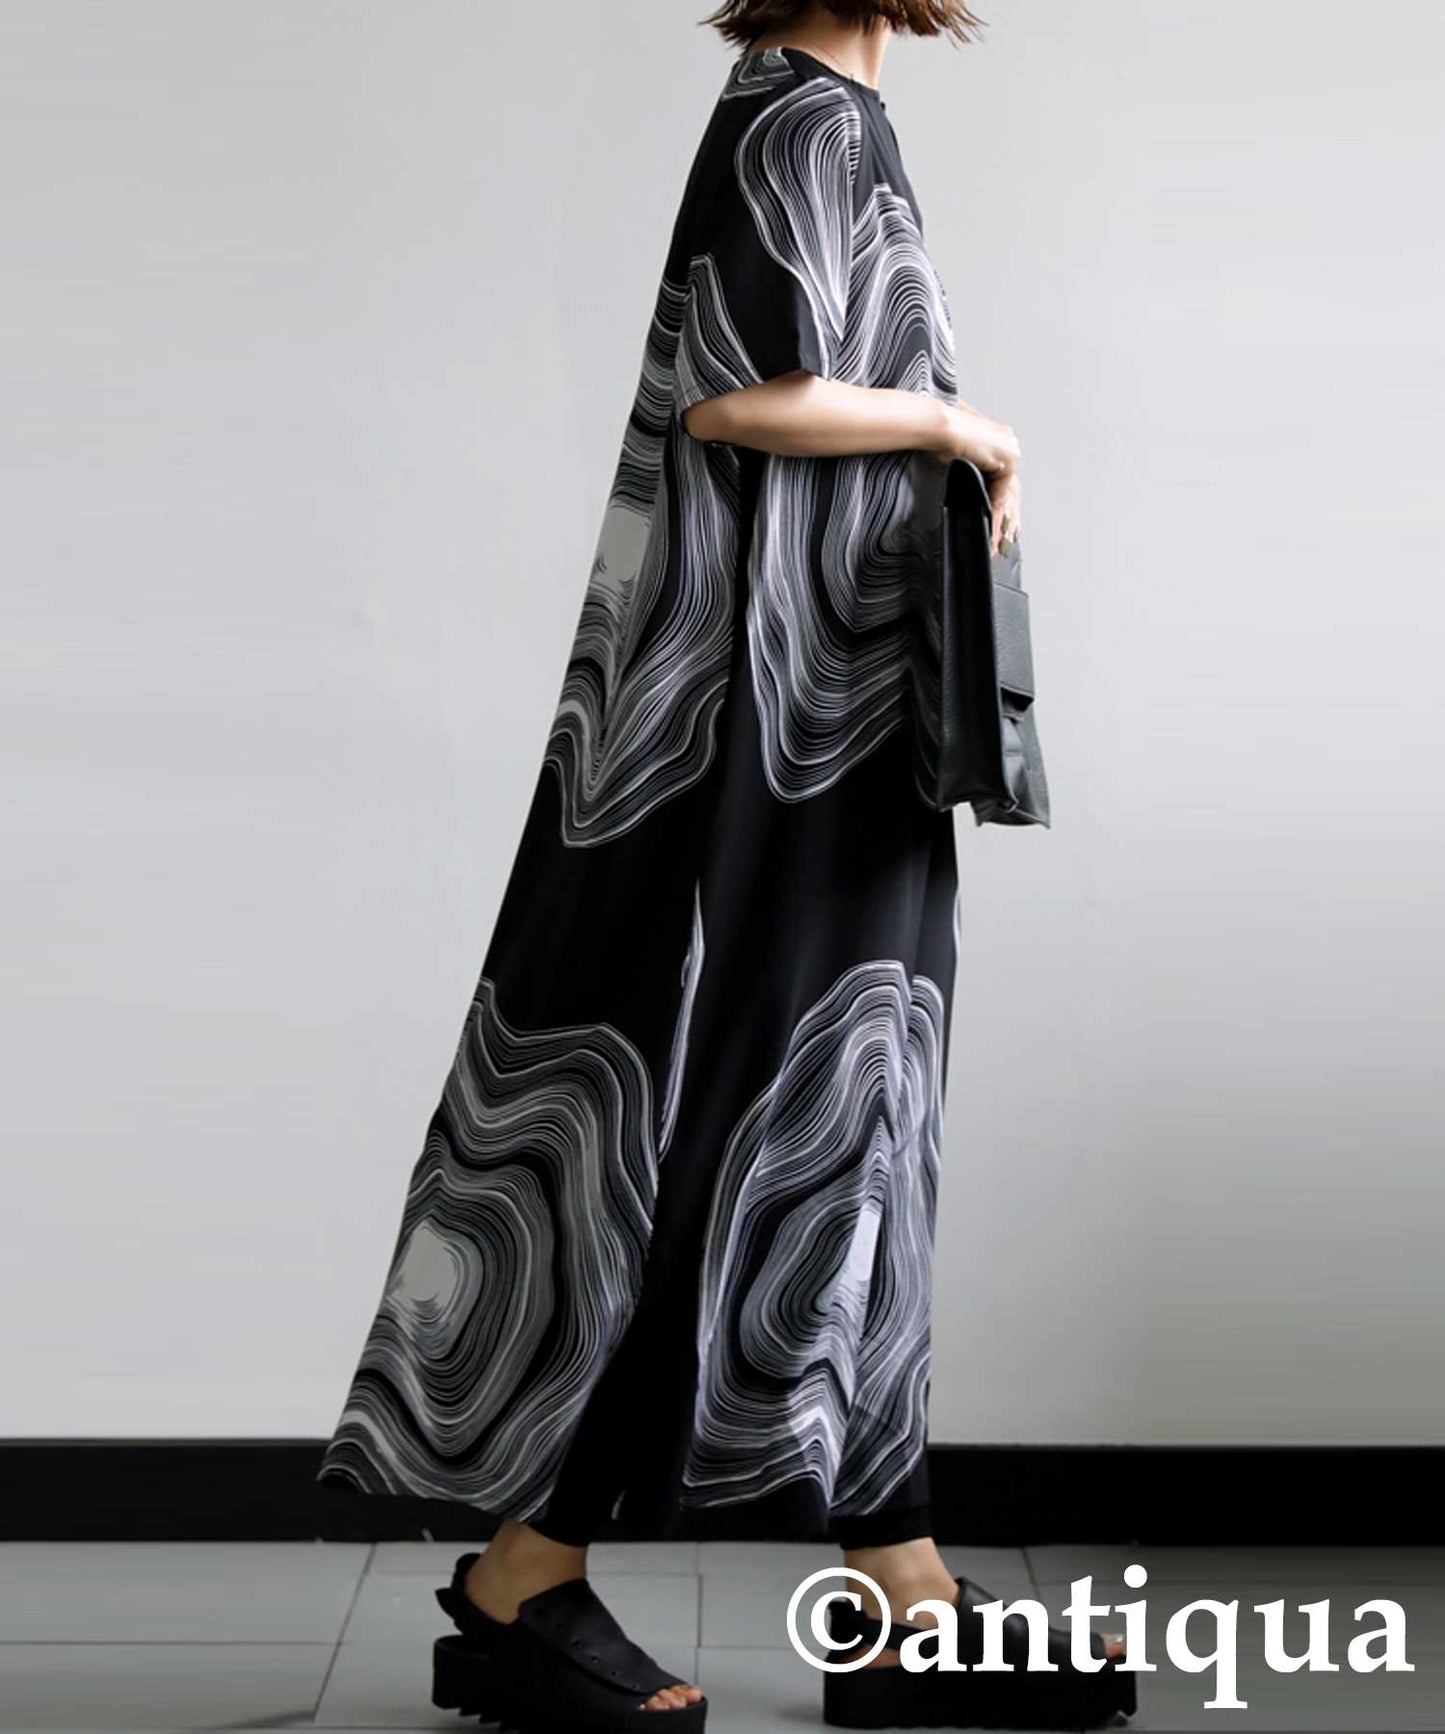 Art Pattern Design Dress Ladies